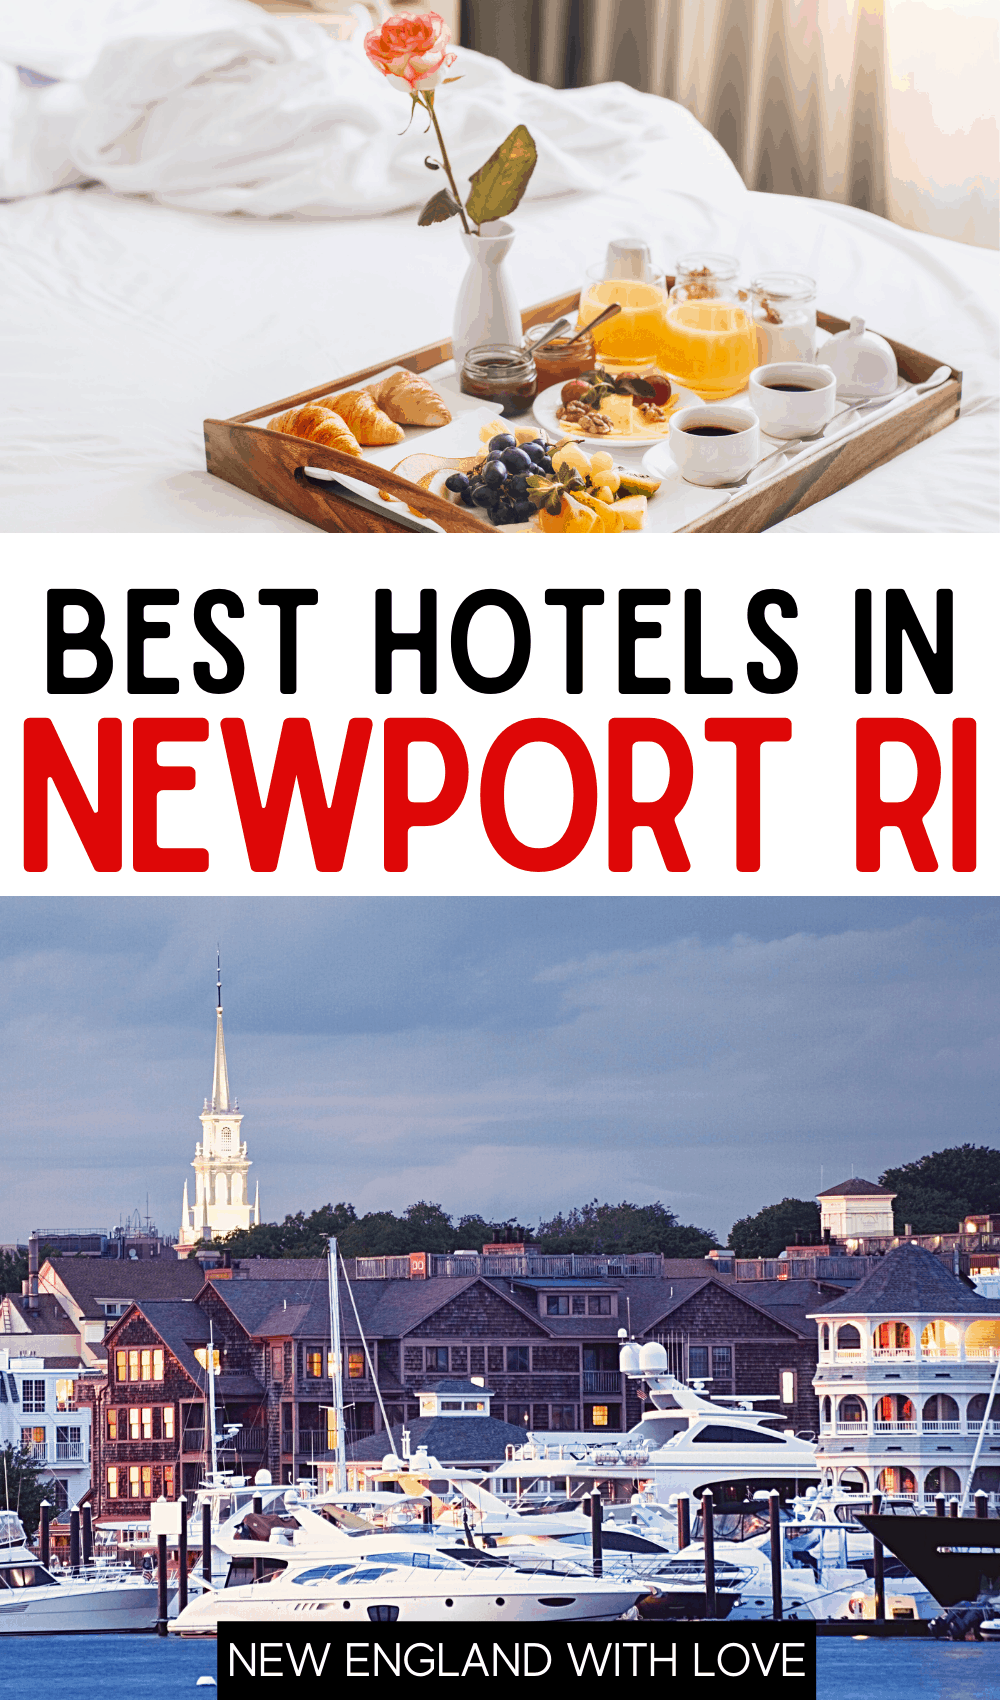 Pinterest graphic reading "BEST HOTELS IN NEWPORT RI"